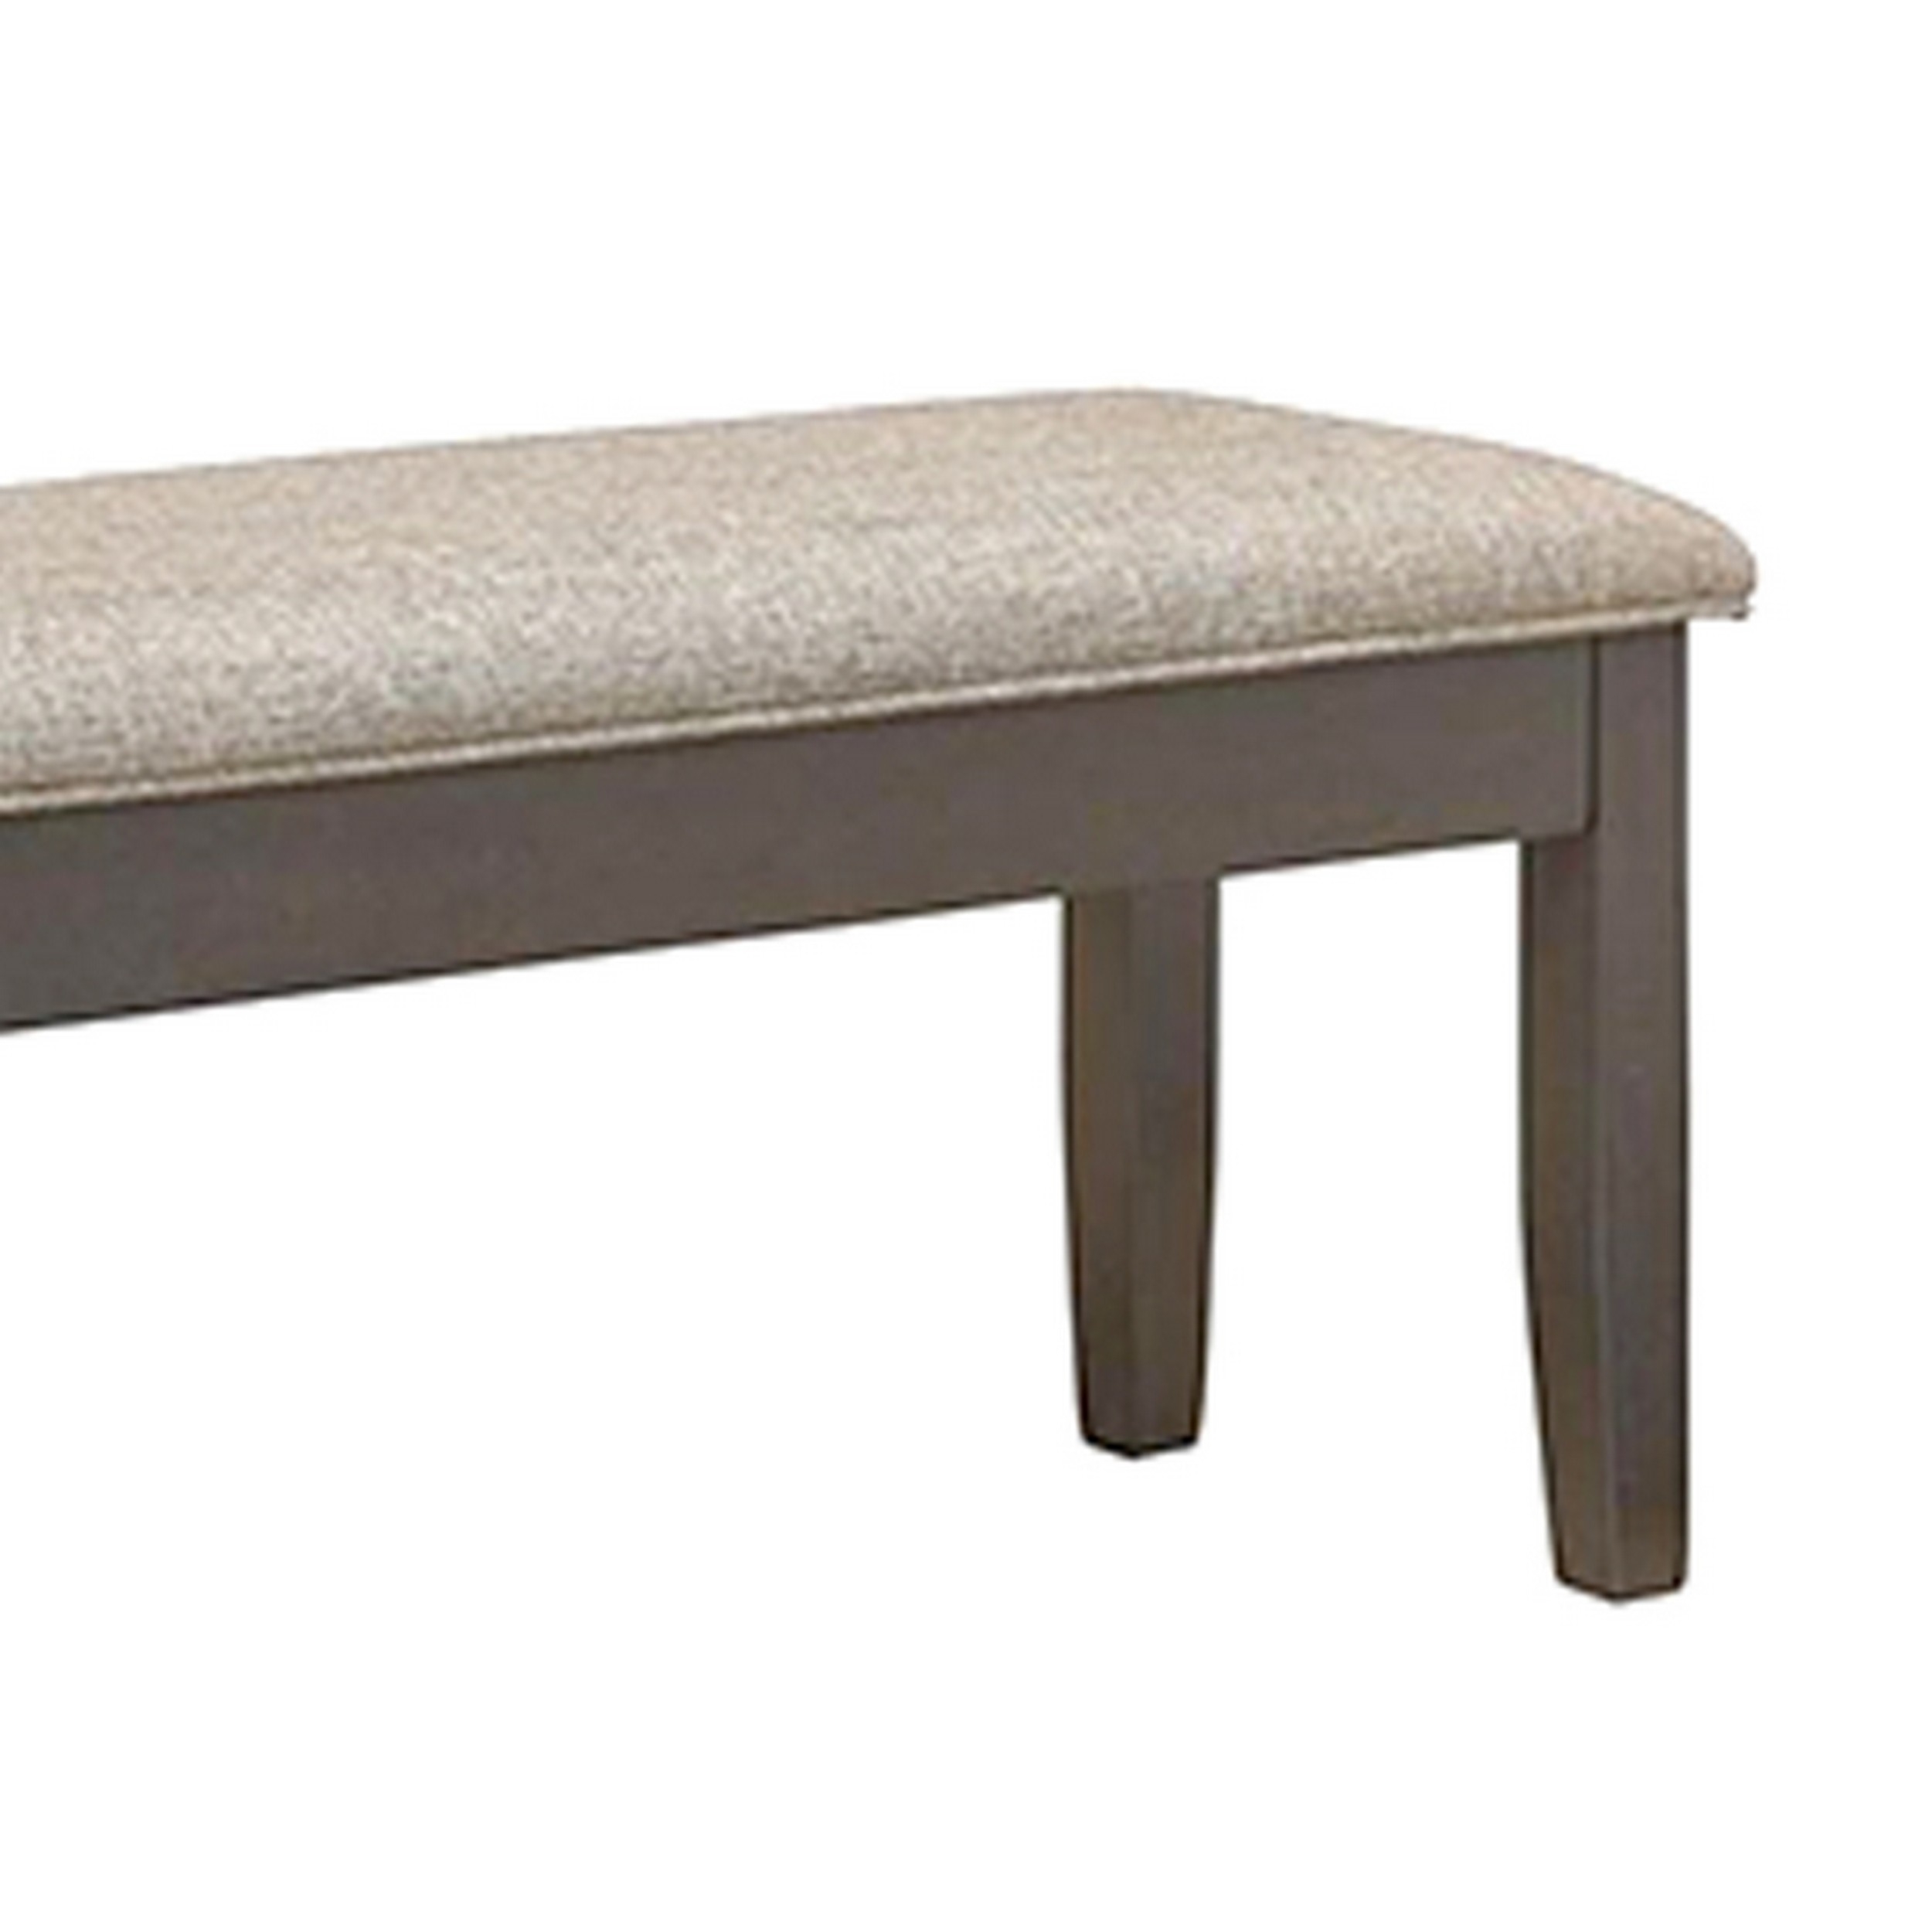 Dylan 48 Inch Bench, Brown Wood Frame, Gray Fabric Upholstered Cushion -Saltoro Sherpi